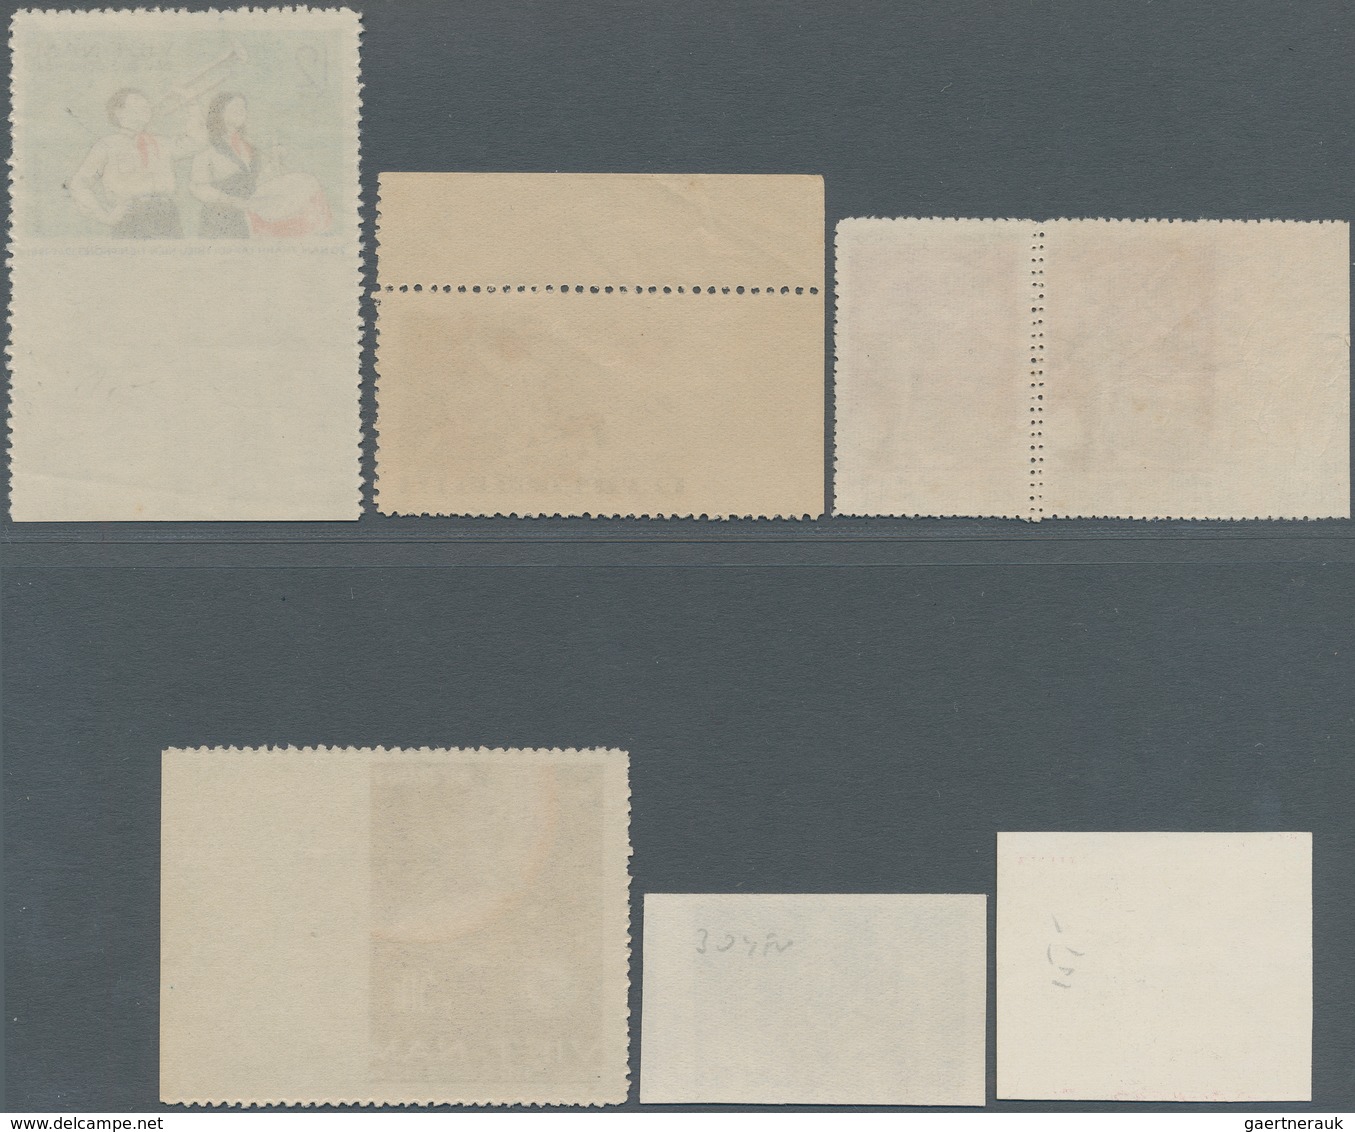 Vietnam-Nord (1945-1975): 1957/1966: Mis-perforated Stamps/Printing Errors. Michel Nr.76 (pair); Imp - Vietnam